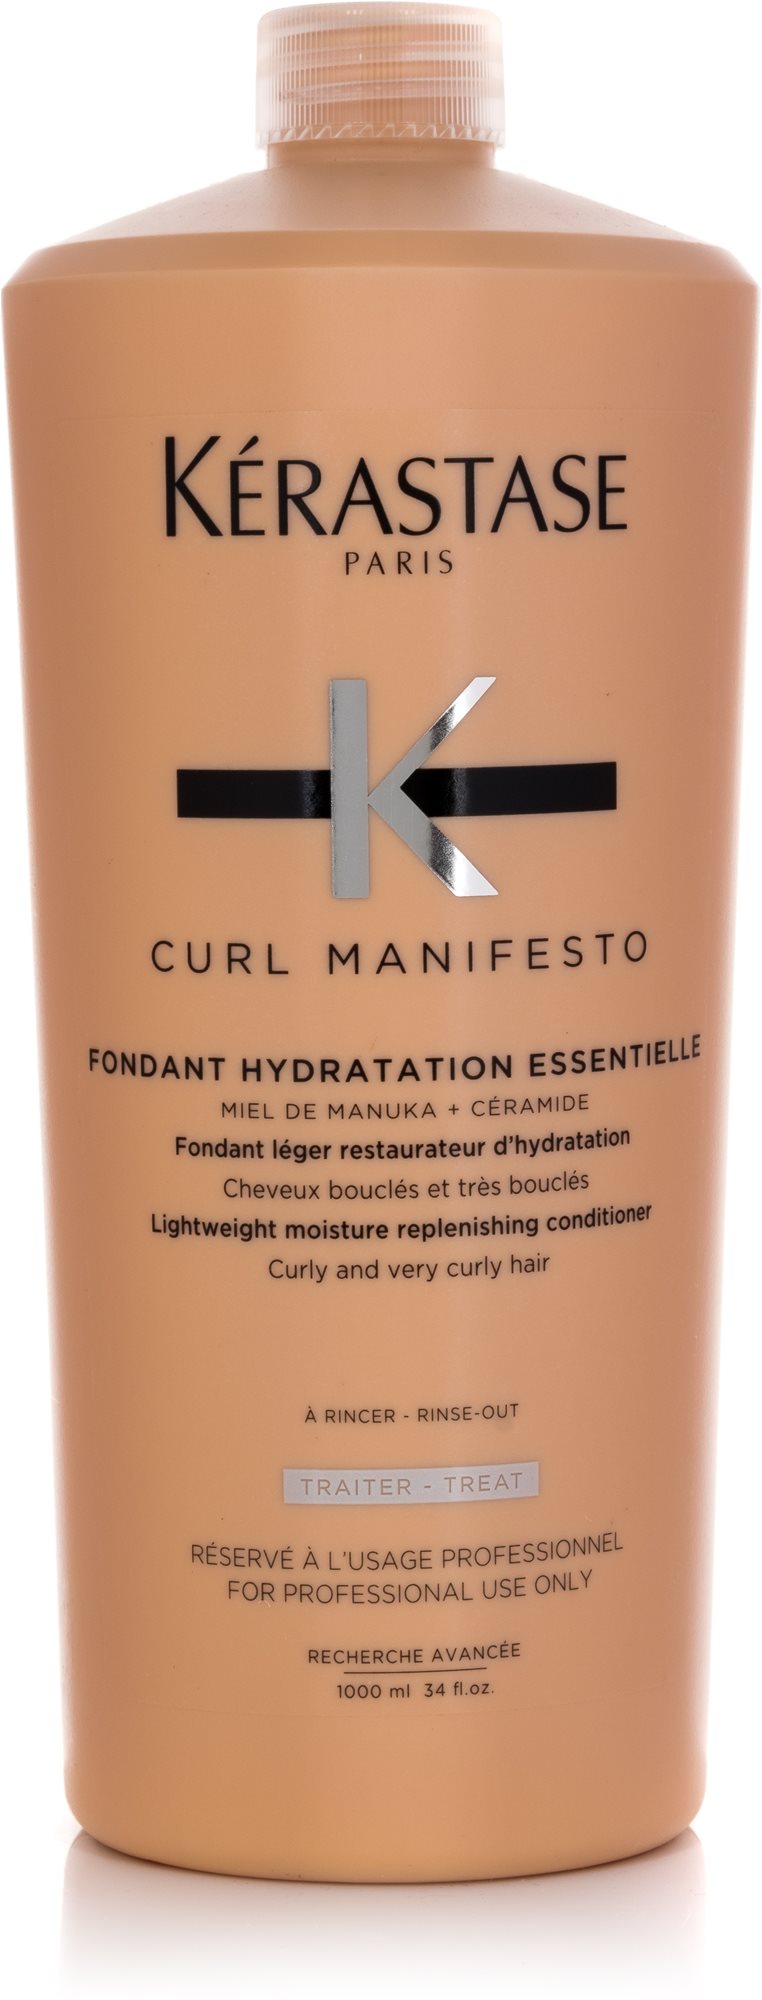 KÉRASTASE Curl Manifesto Fondant Hydration Essentielle Conditioner 1000 ml